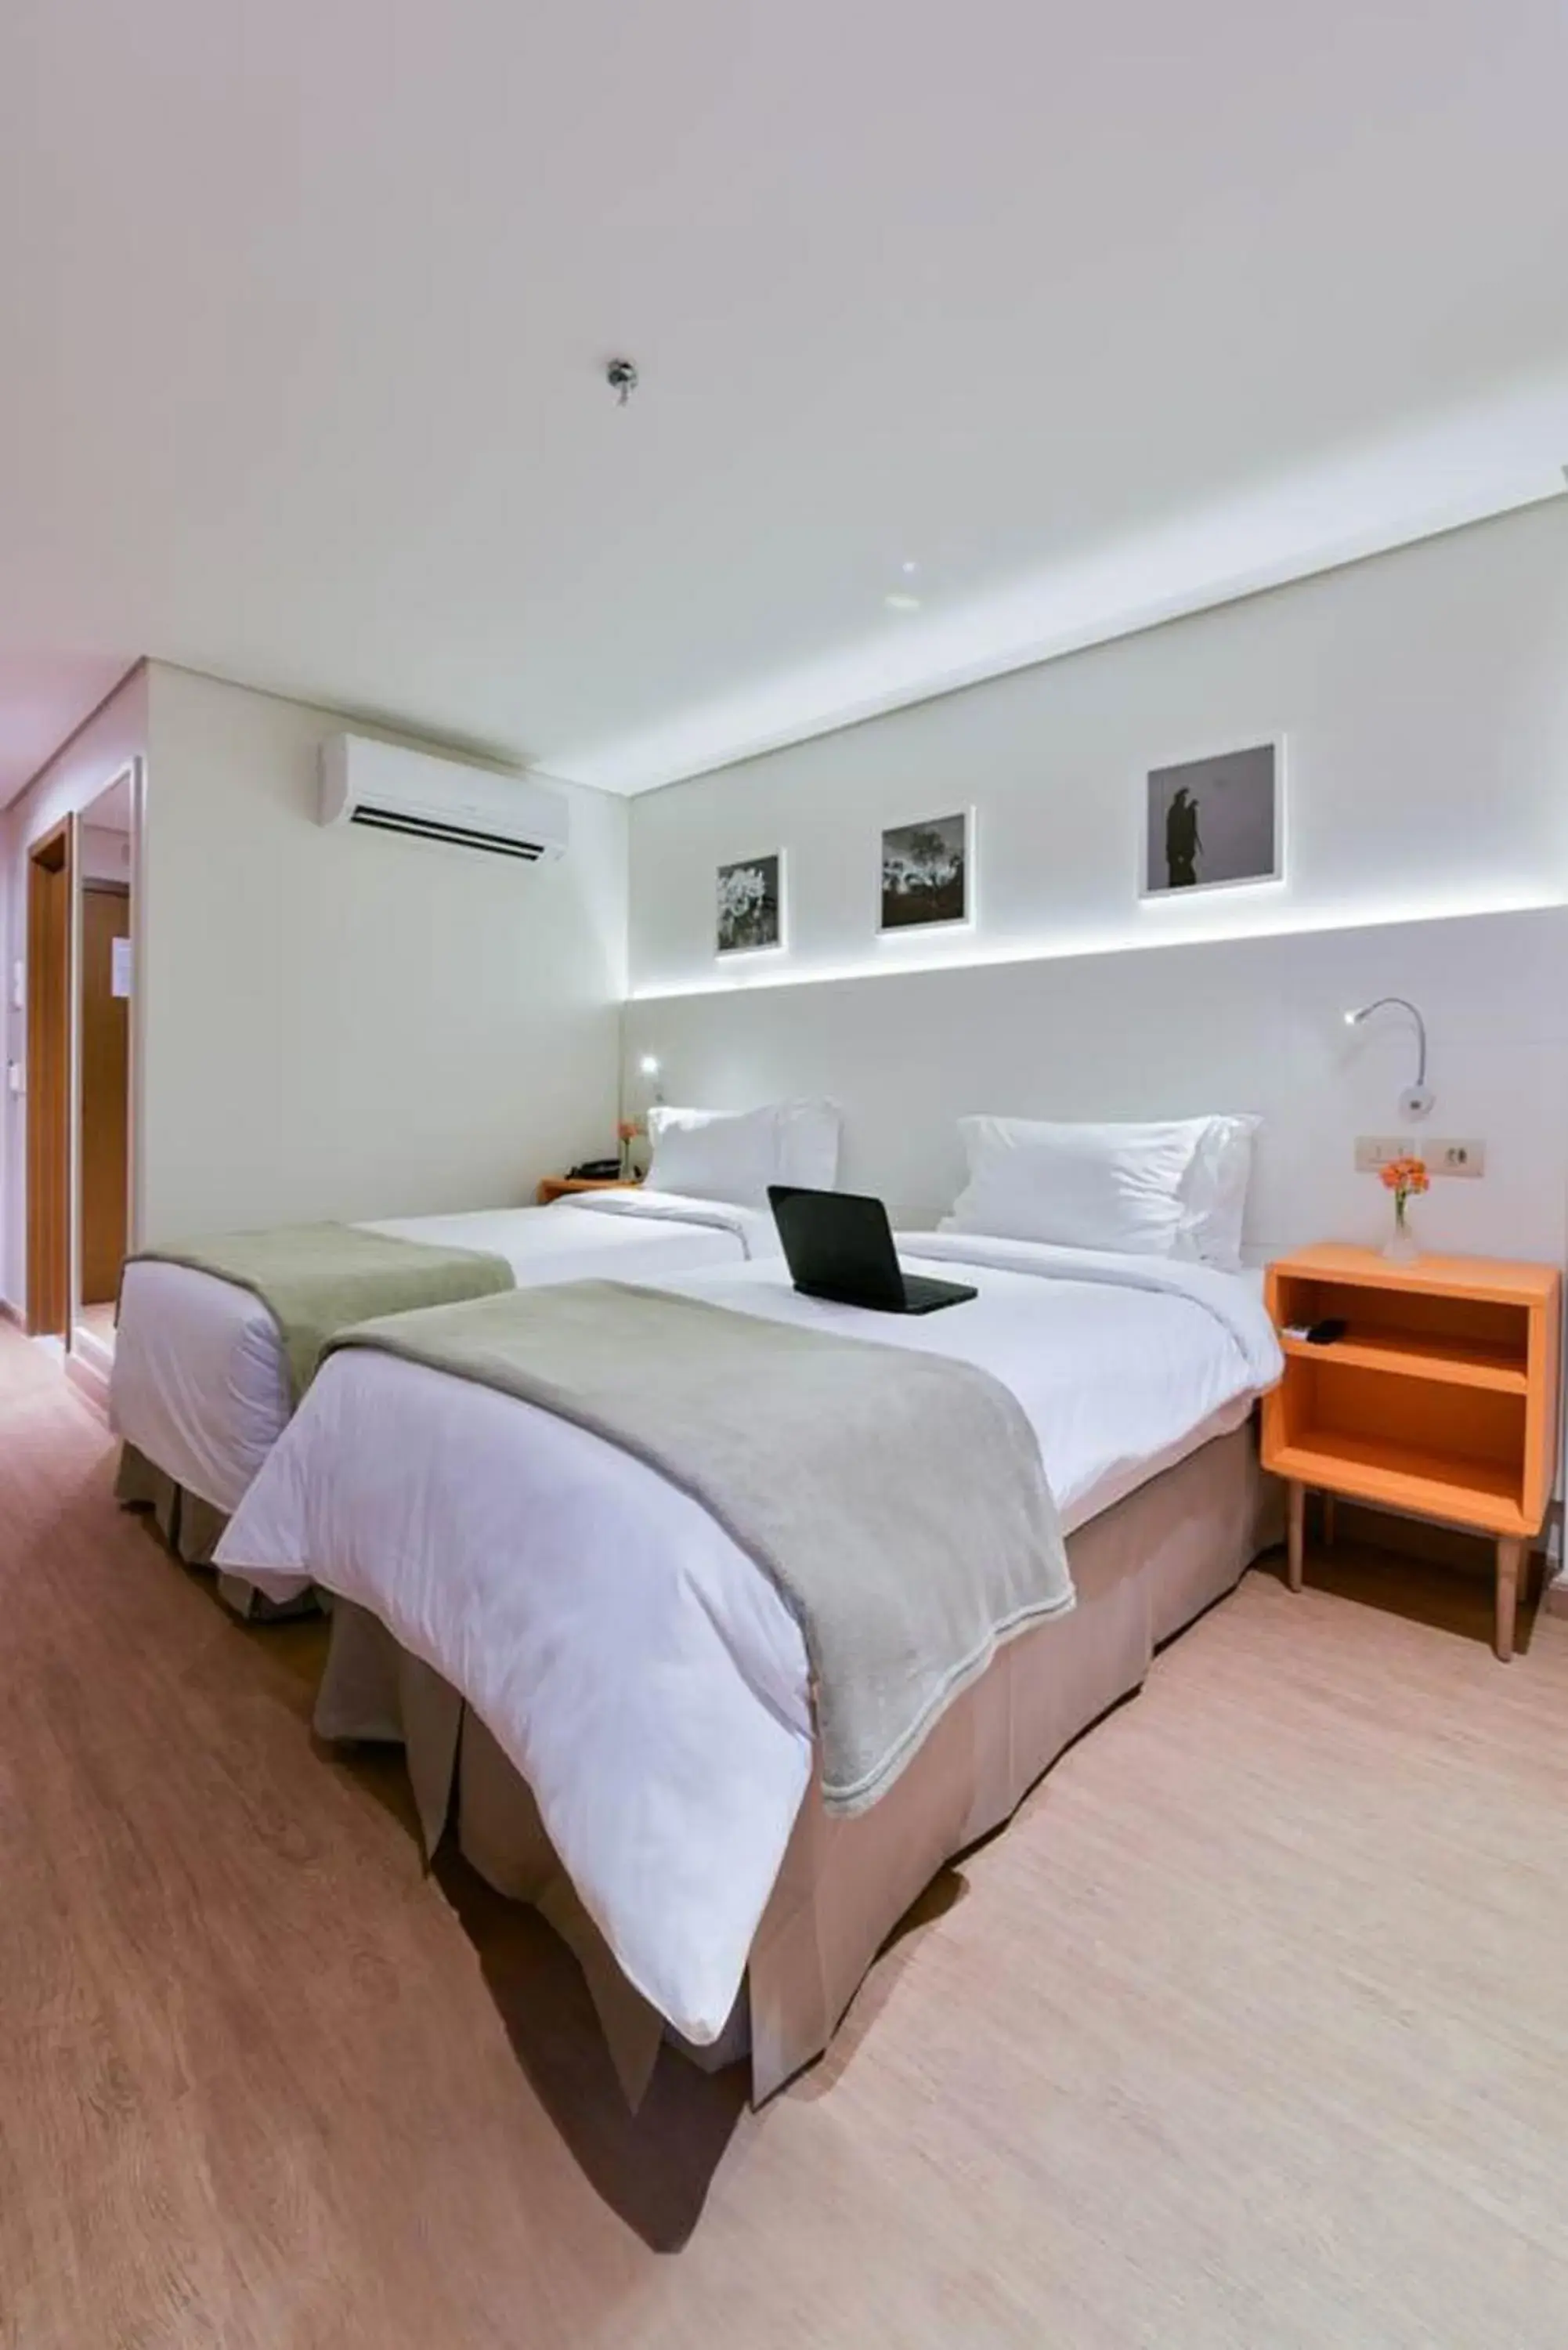 Bedroom, Bed in Intercity Anápolis